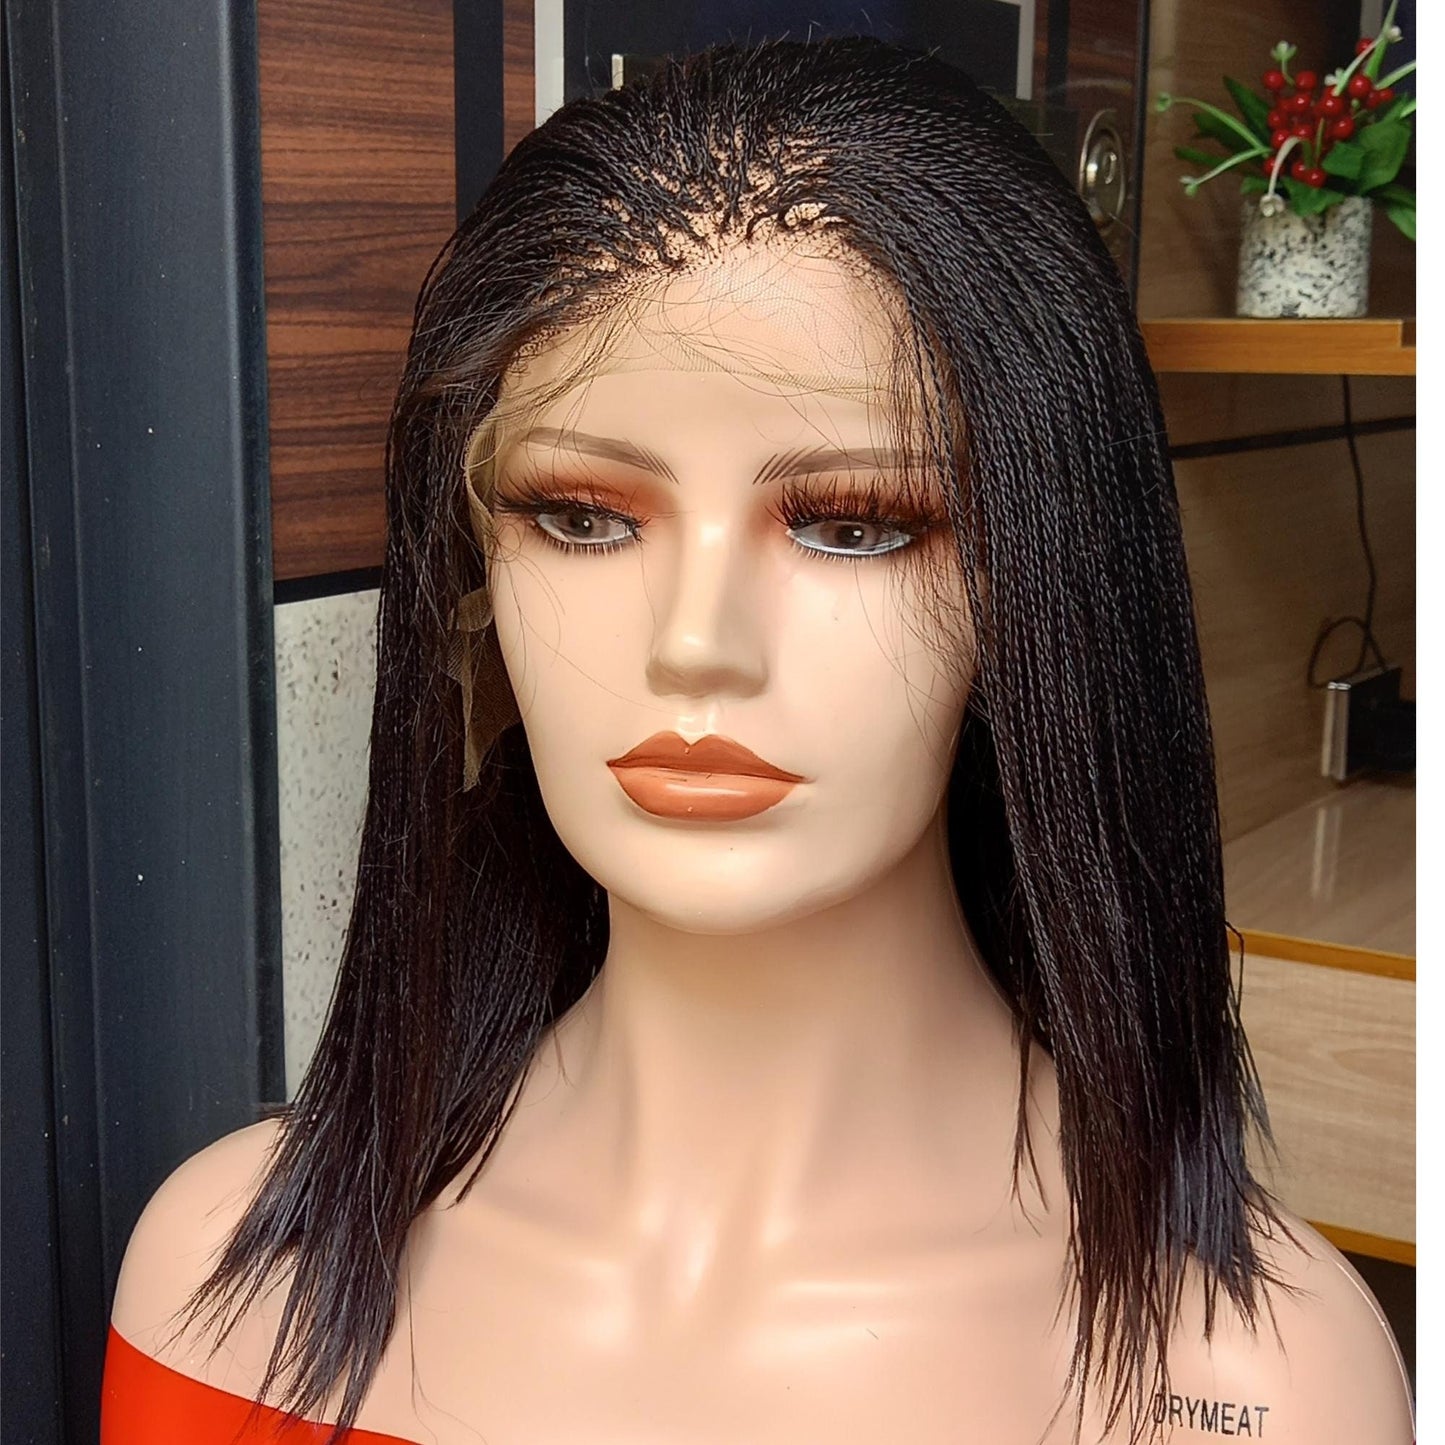 2 in 1 set of braided wig, Micro braid wig, short bob box braid wig, box braided wig, synthetic braid wig, braided wigs for black women - BRAIDED WIG BOSS